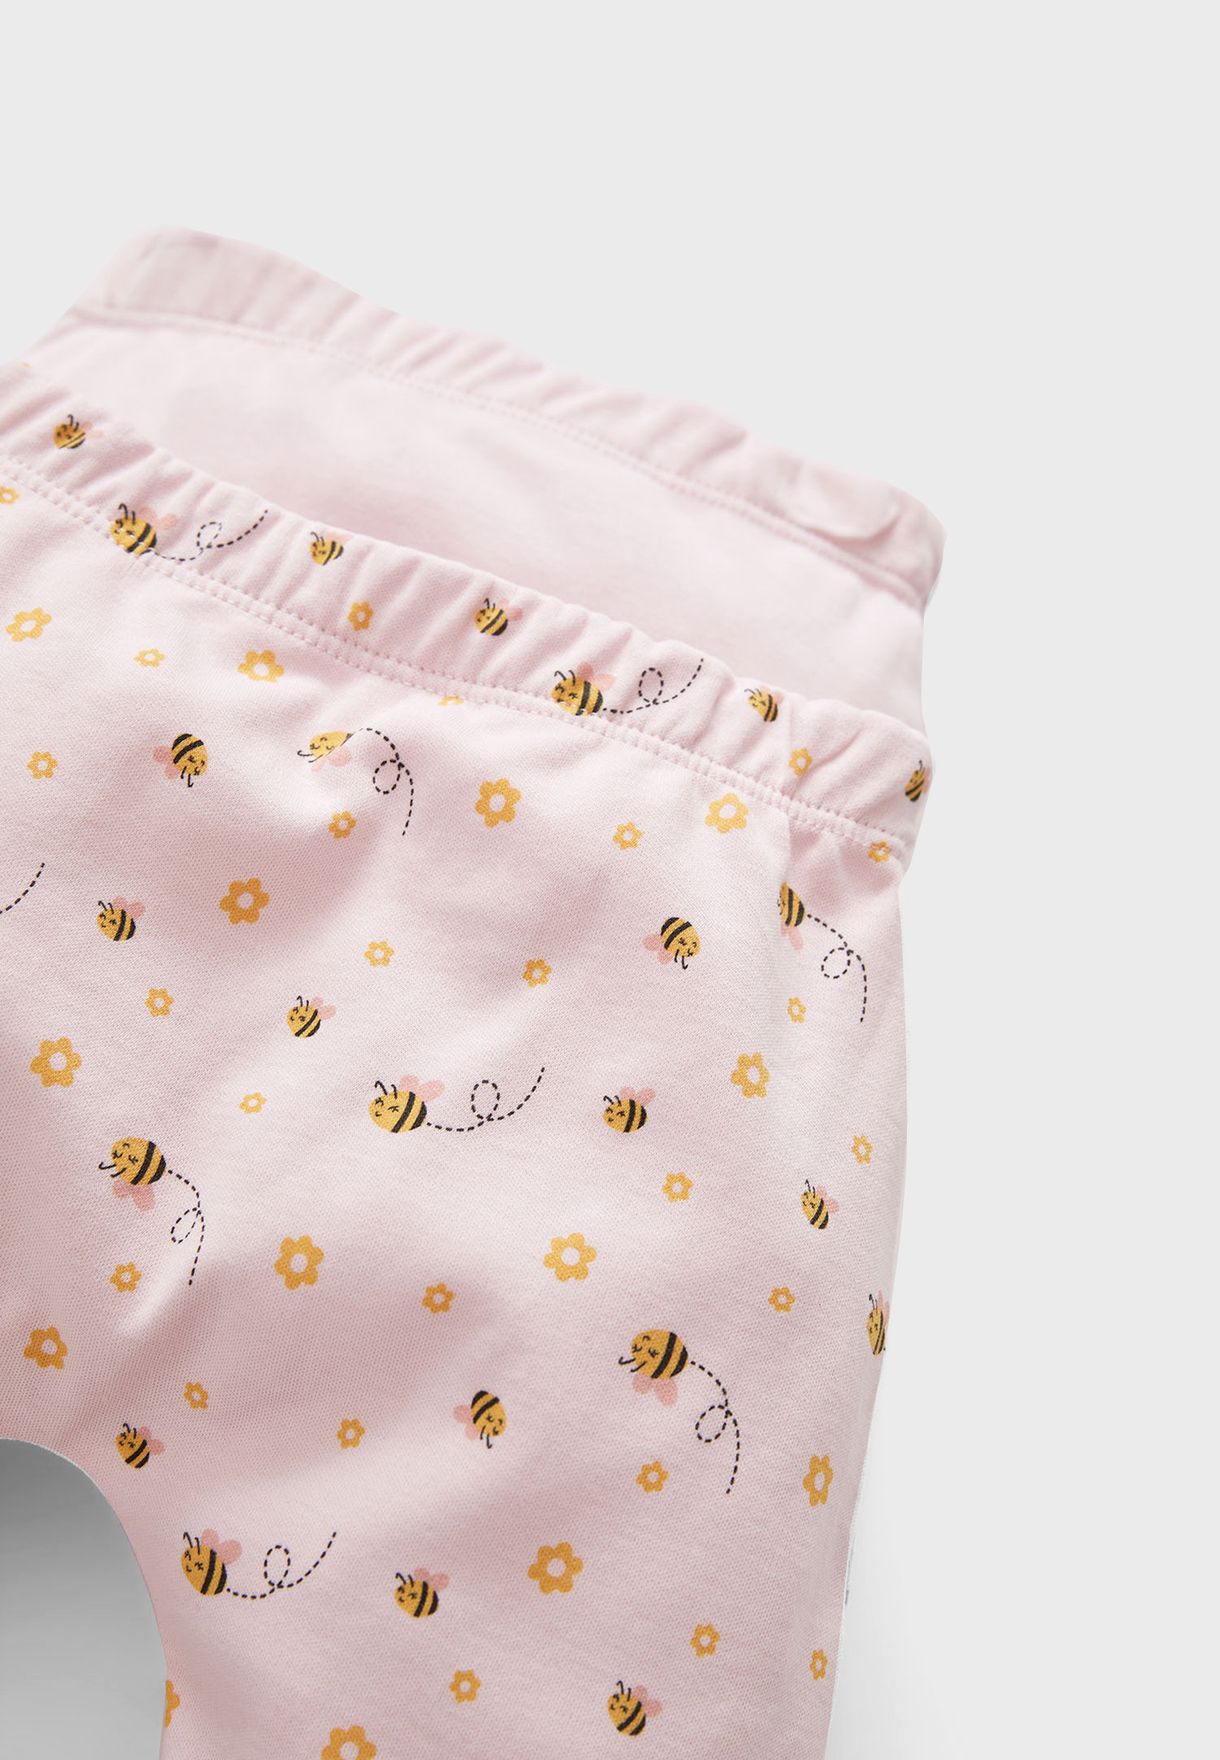 Infant 2 Pack Printed Sweatpants